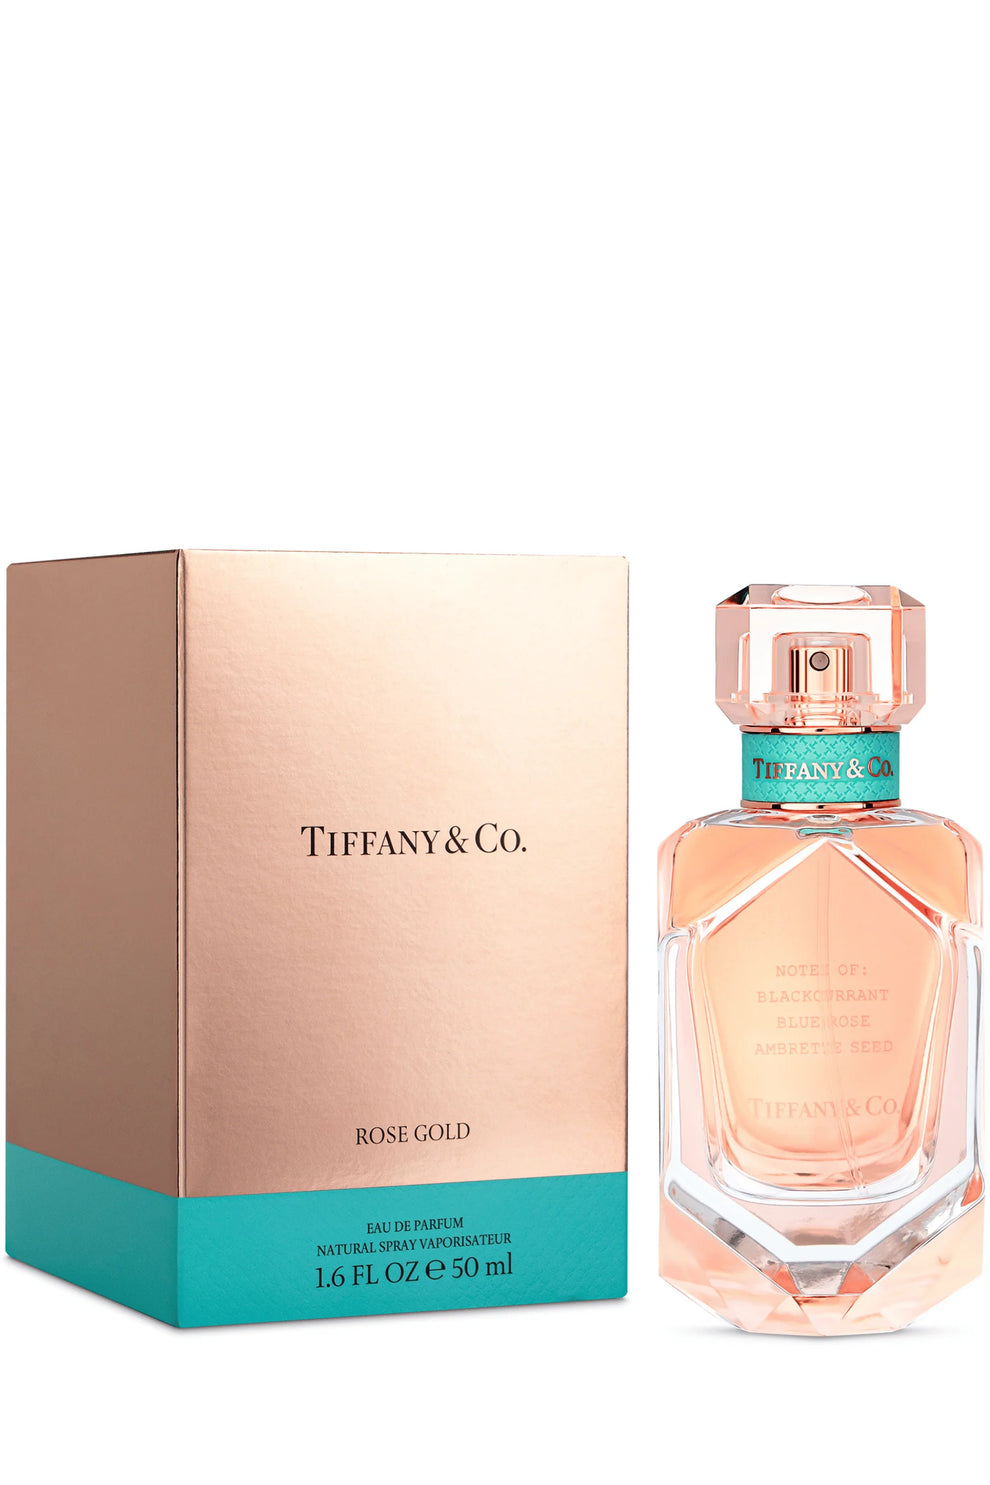 Rose Gold Eau de Parfum Spray for Women by Tiffany $ Co Product image 1